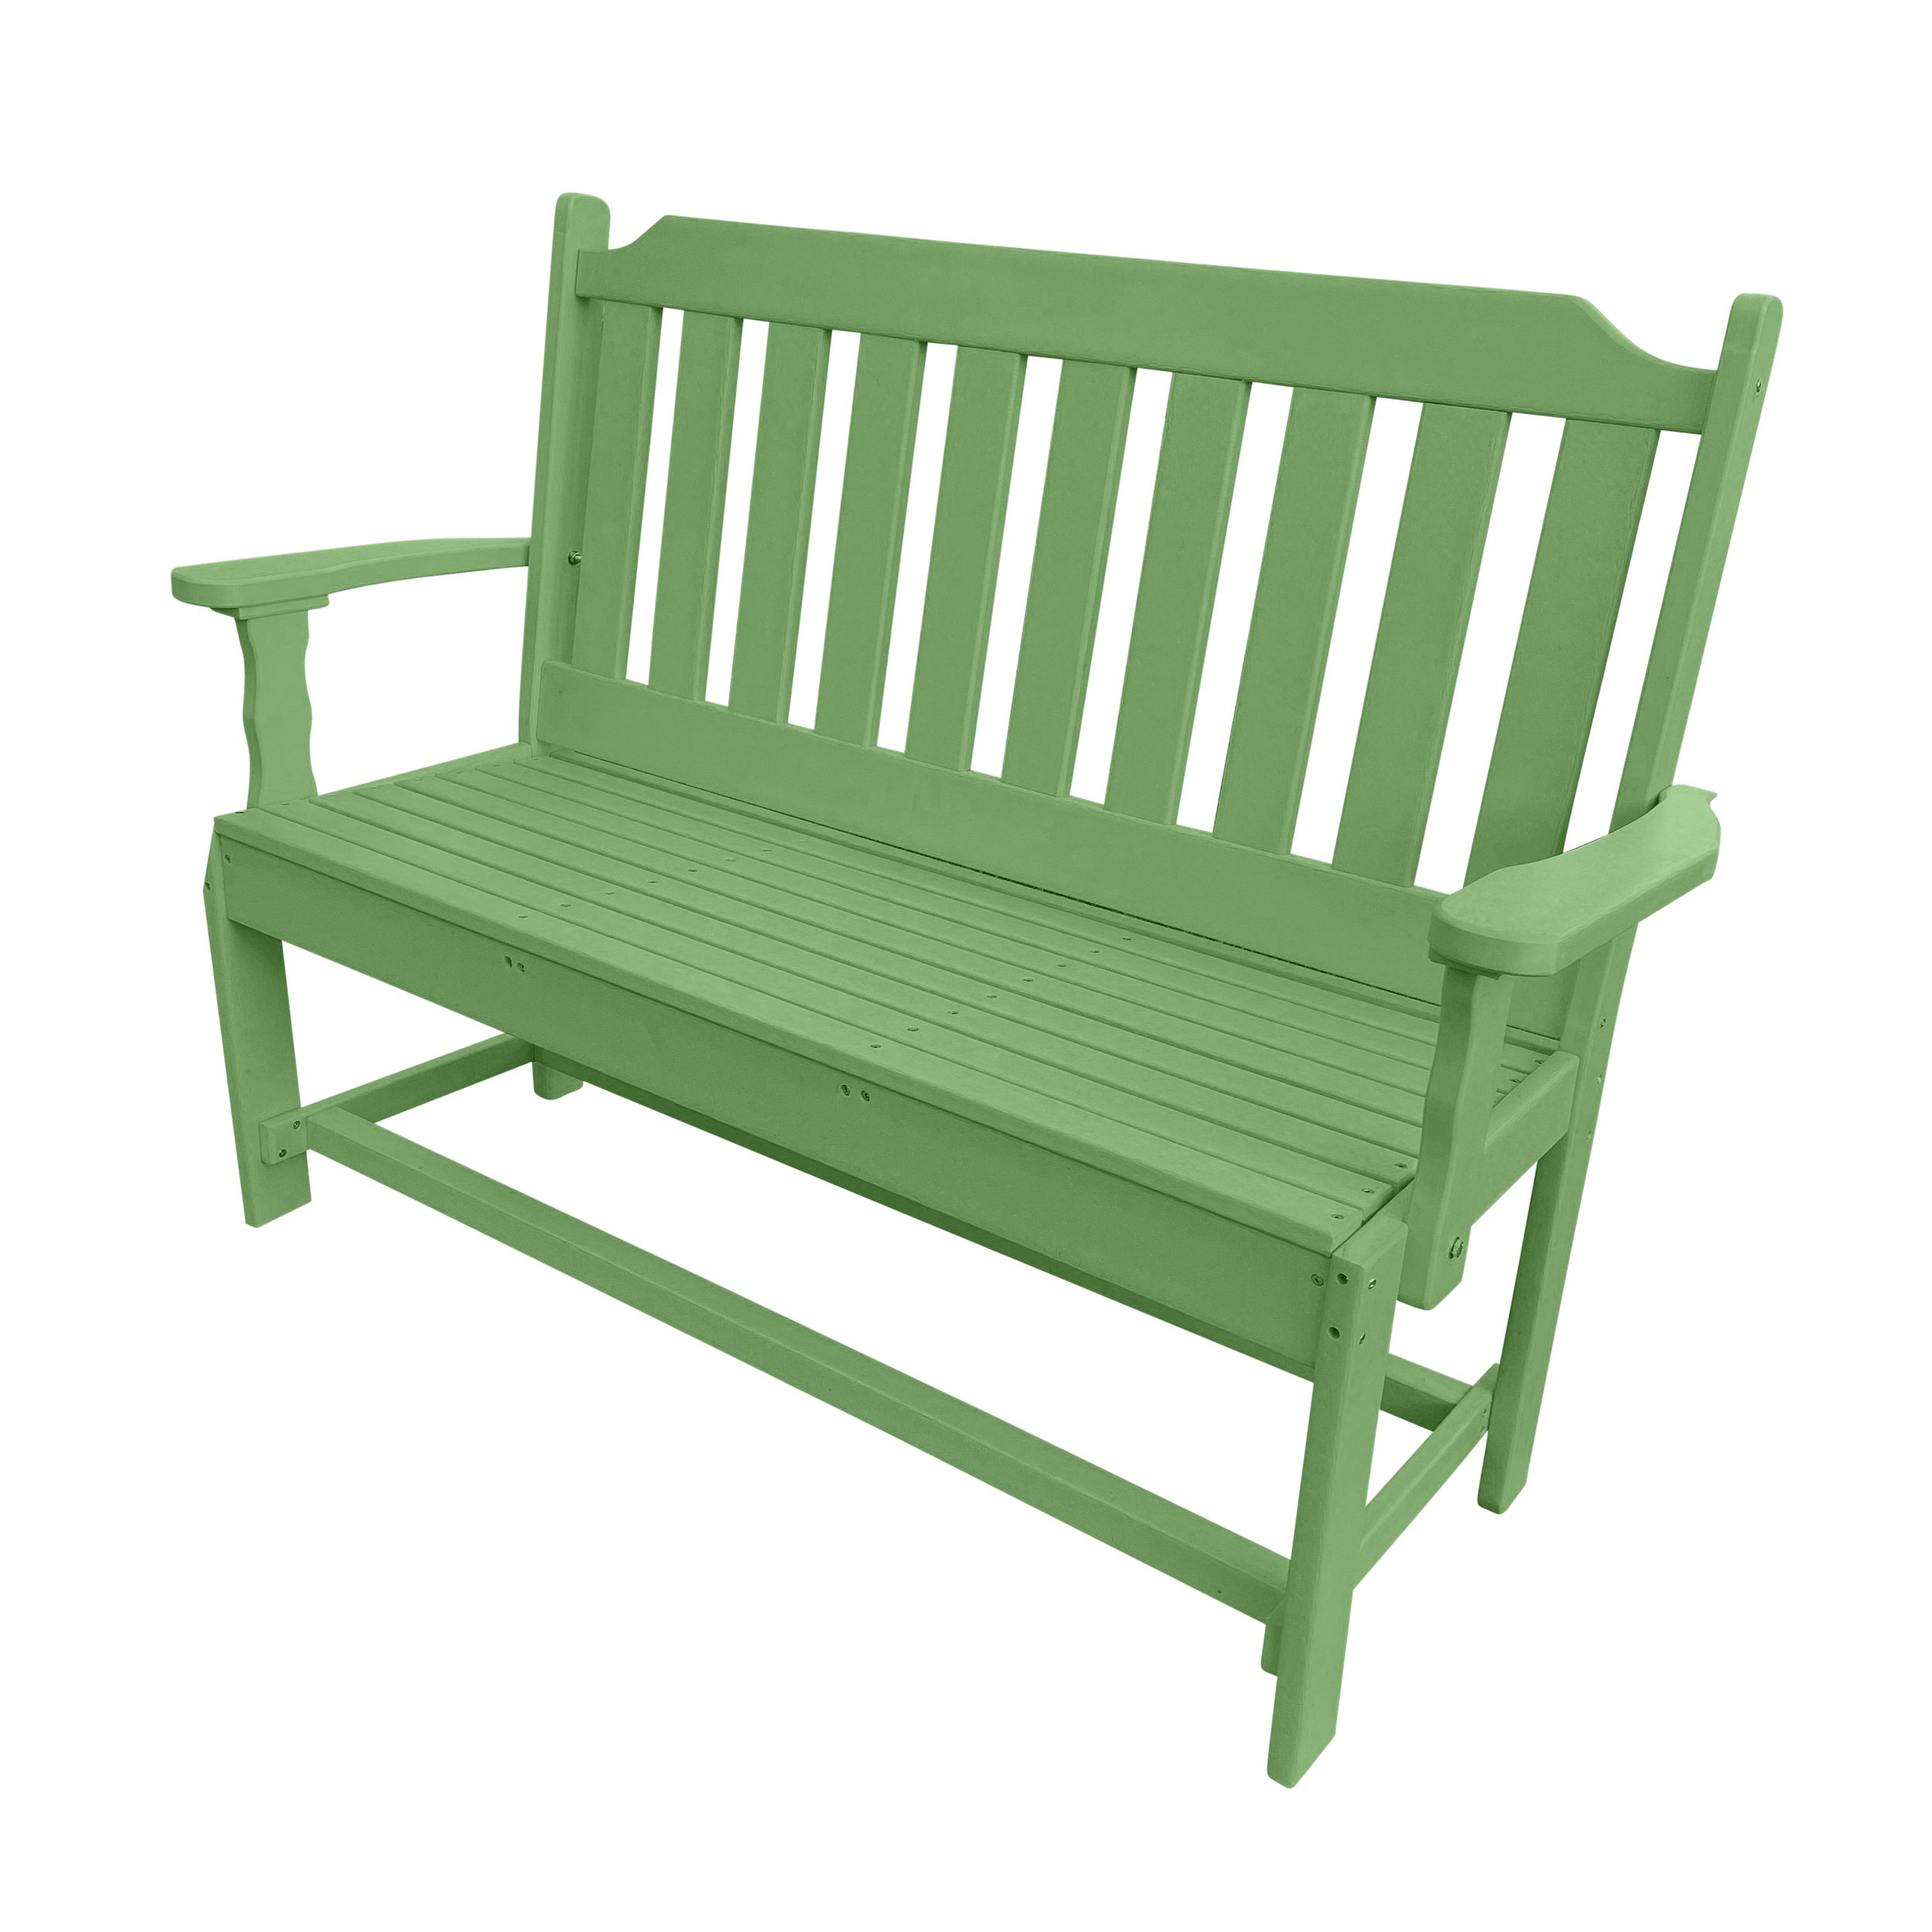 Garden bench | Lime green.jpg